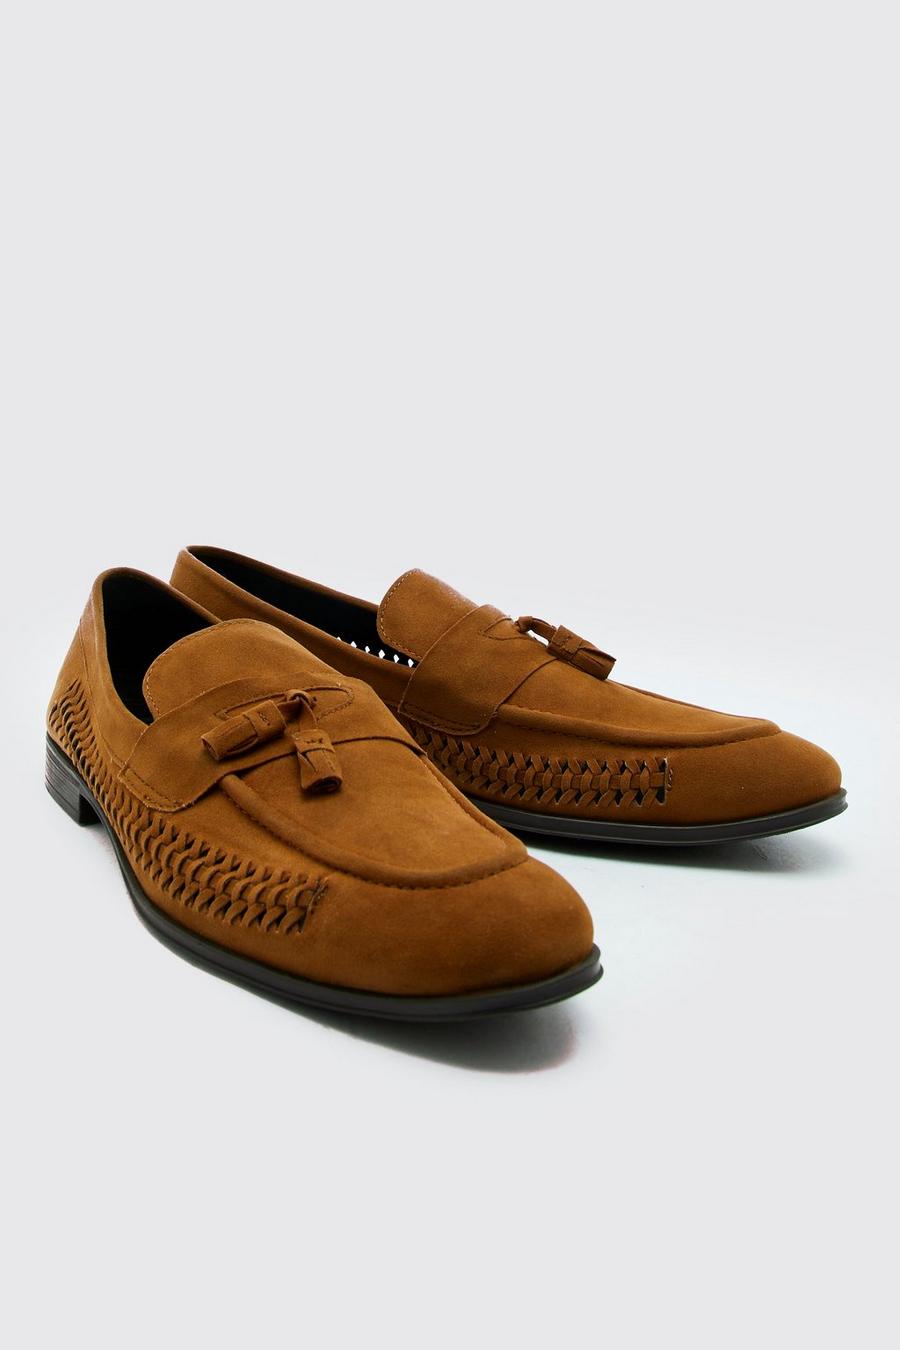 Tan marrón נעלי לאופר מבד דמוי זמש עם עיטור שזירה image number 1